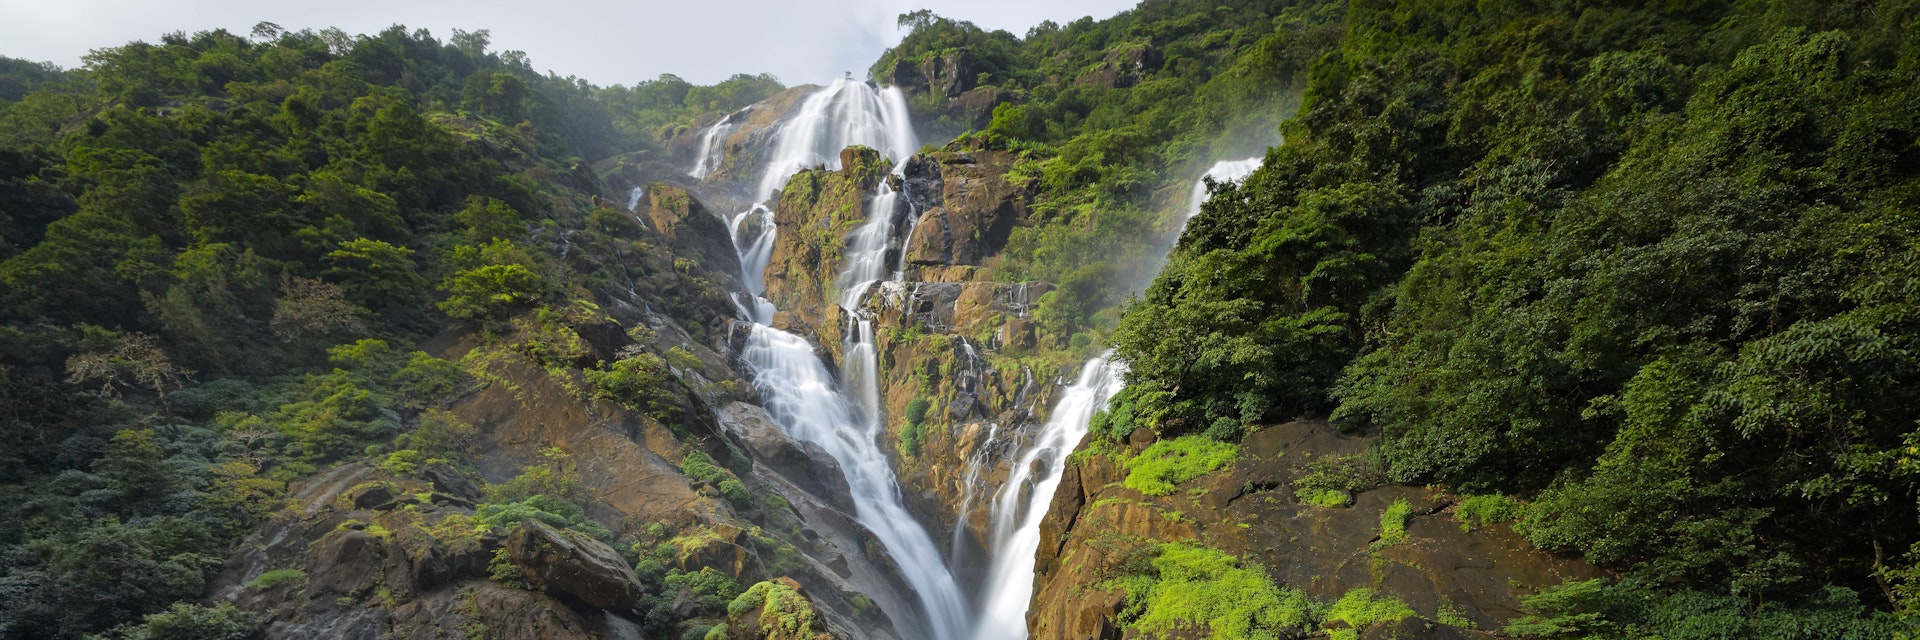 Dudhsagar Waterfall, Goa, INDIA, Circa September 2017; Dudhsagar Falls

 Shutterstock ID 717821329; your: Bridget Brown; gl: 65050; netsuite: Online Editorial; full: POI Image Update